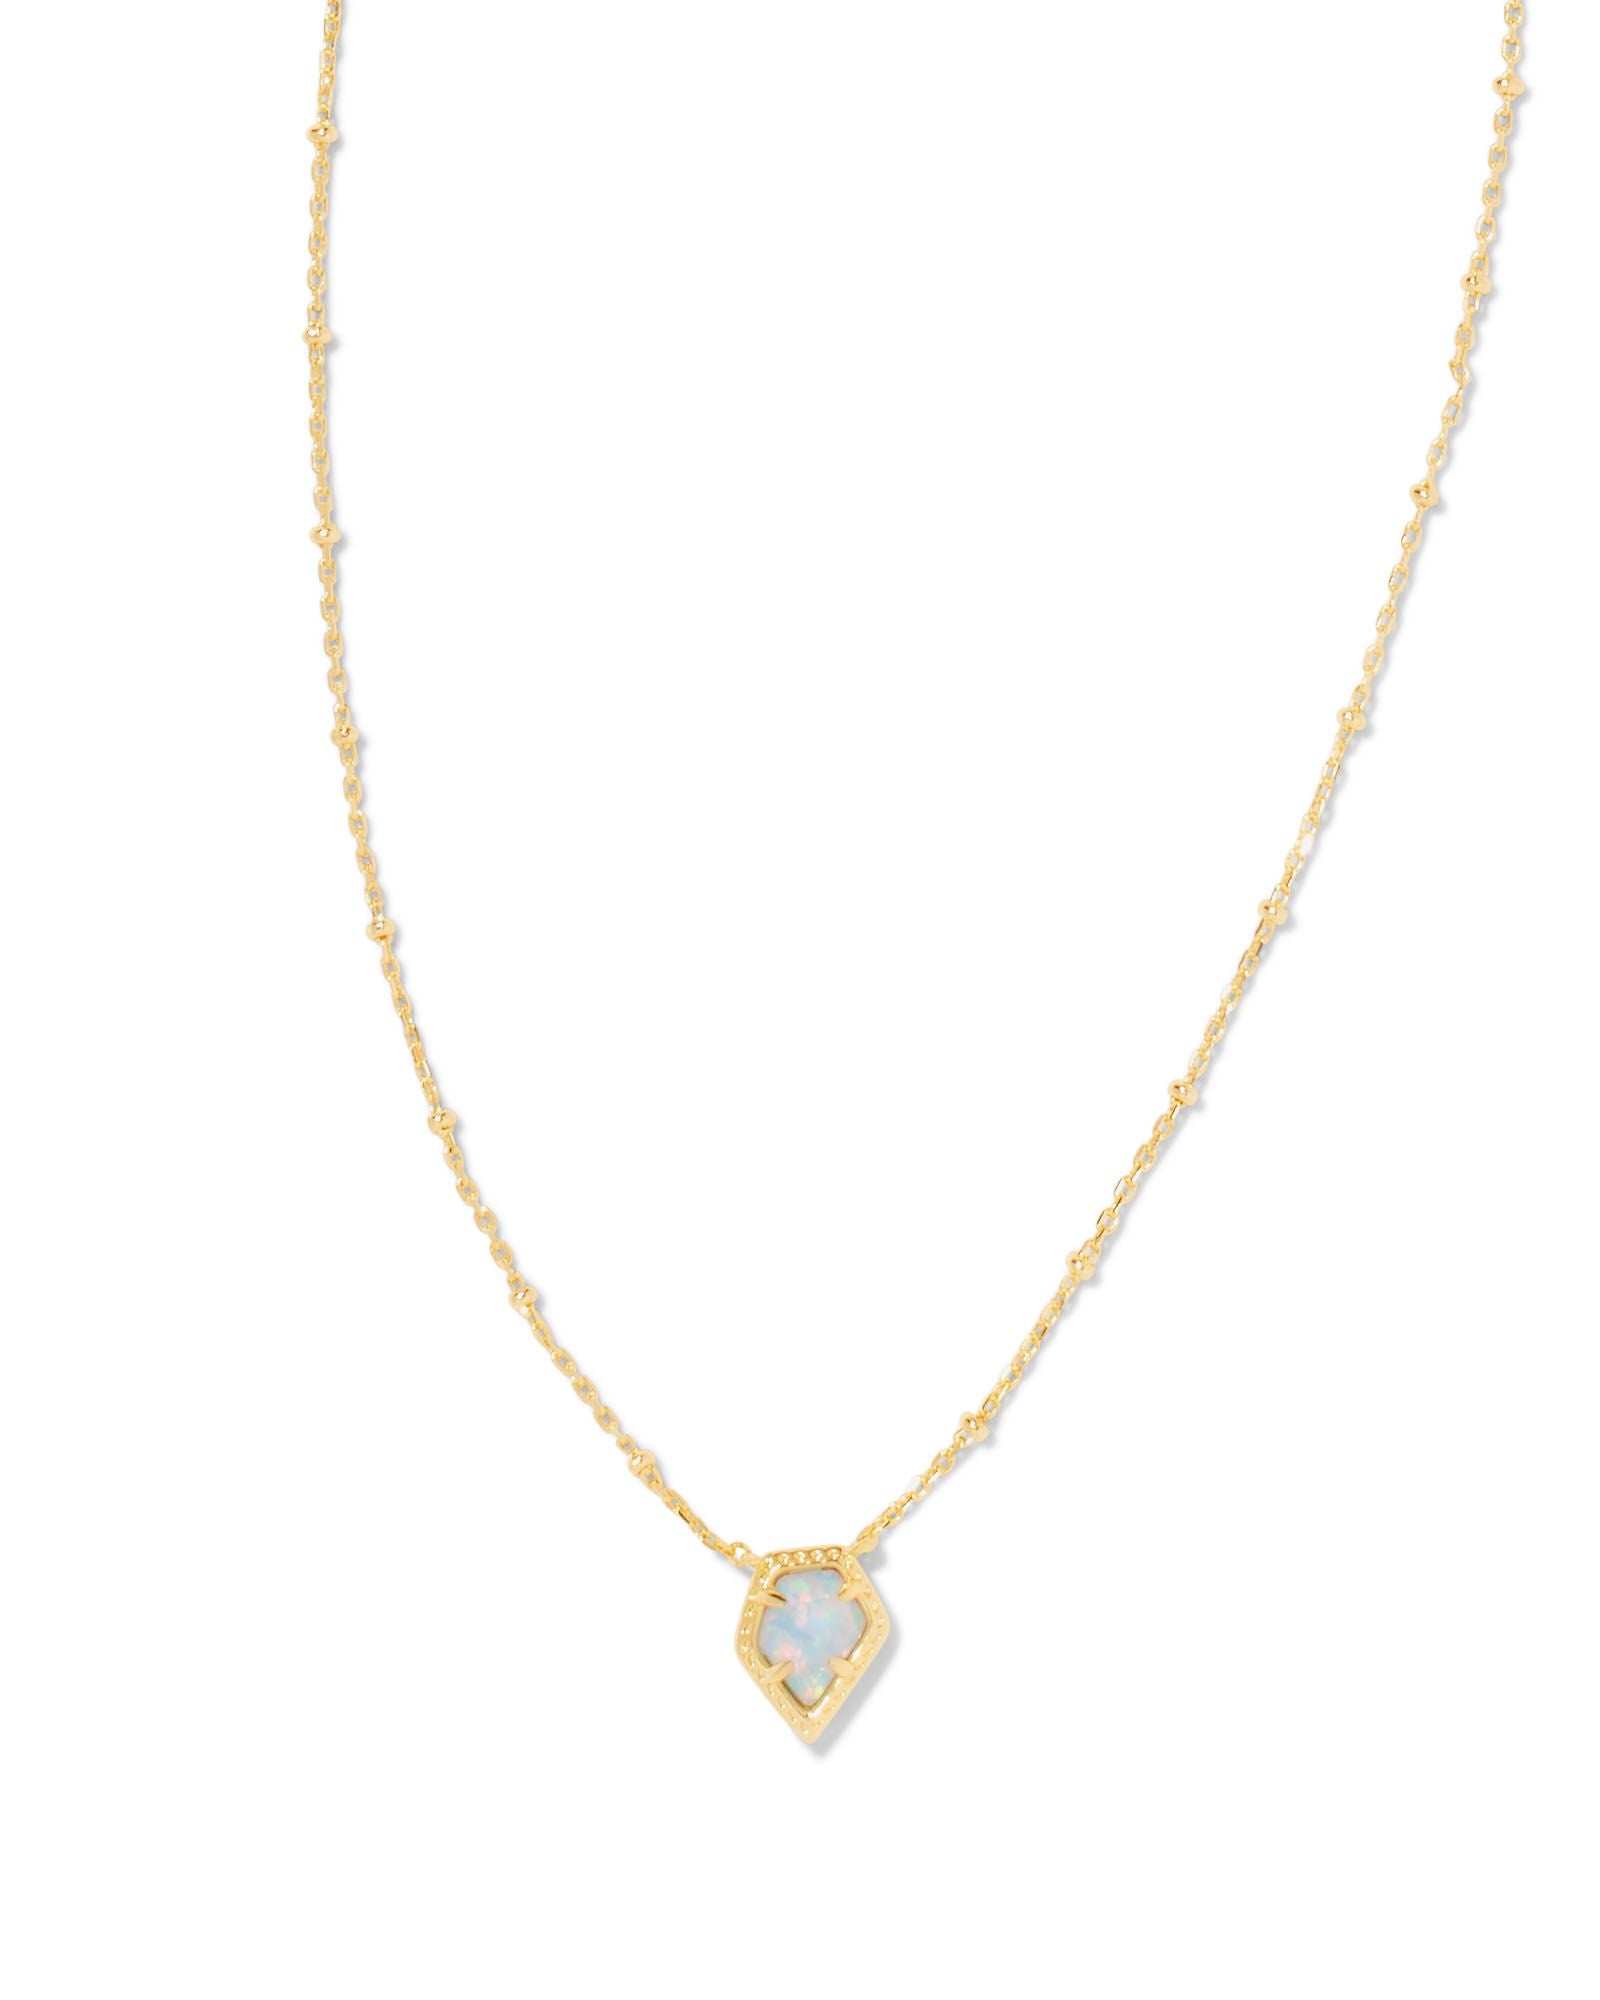 Framed Tessa Satellite Pendant Necklace Gold Luster Light Blue Kyocera Opal